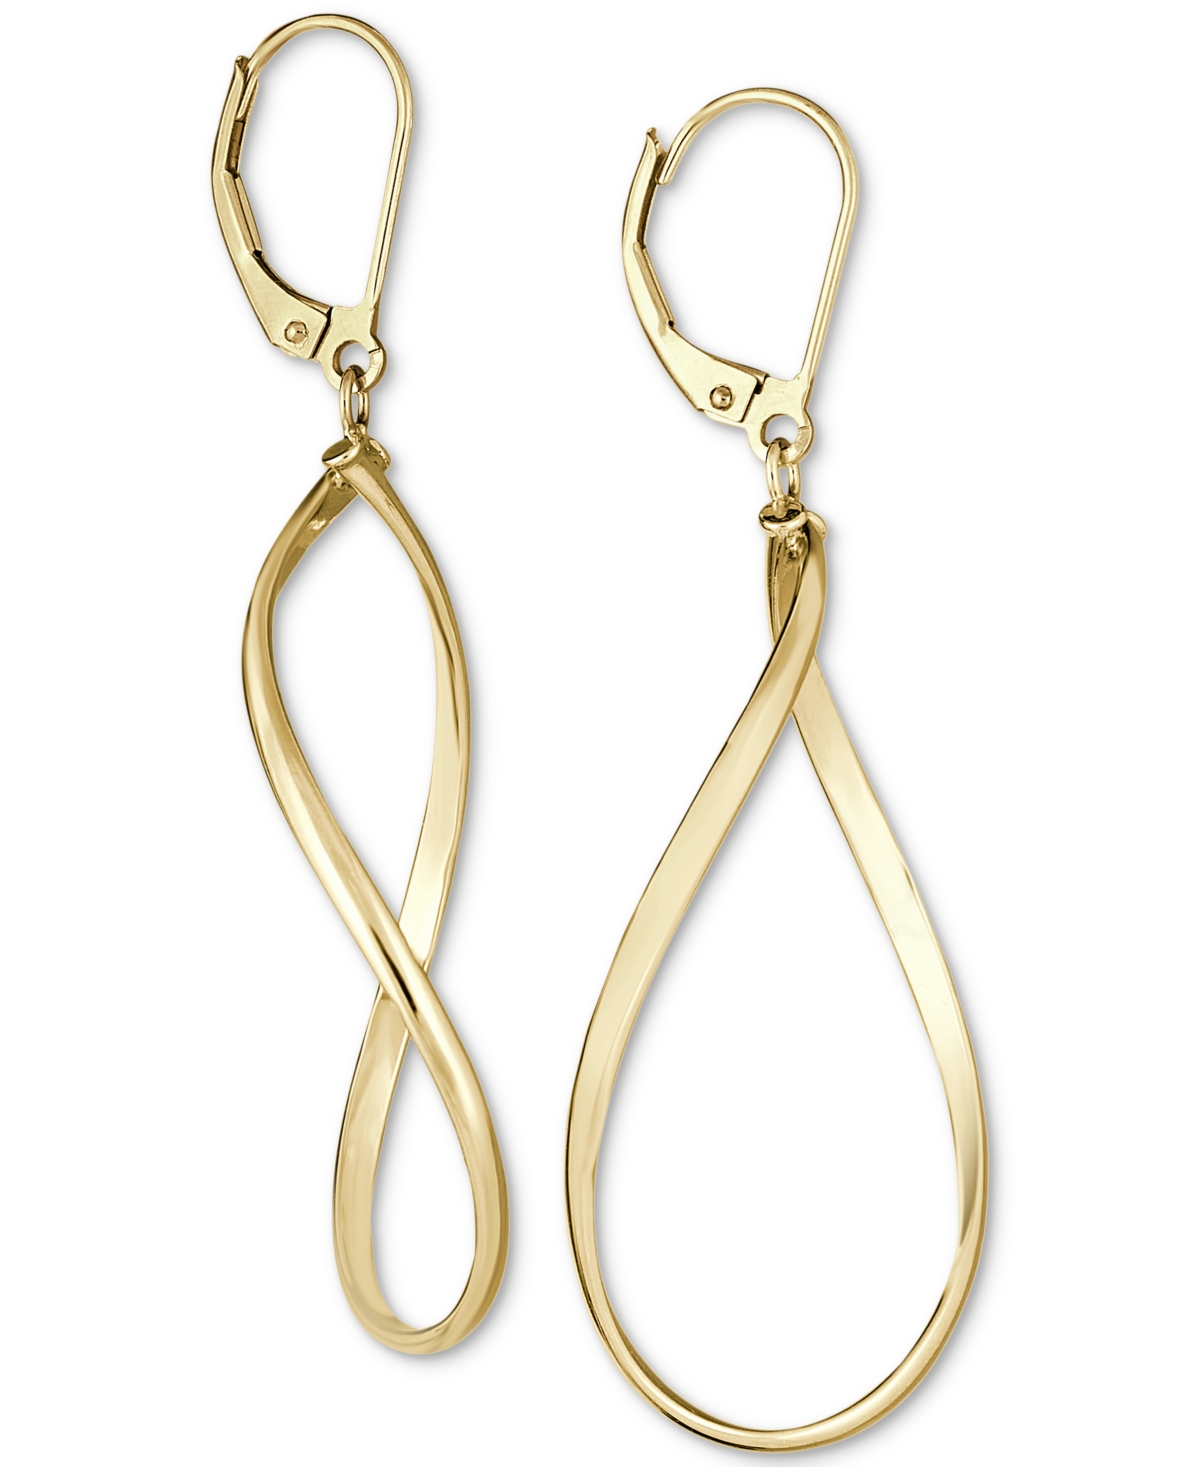 Polished Oval Drop Earrings in 14k Gold - Gold